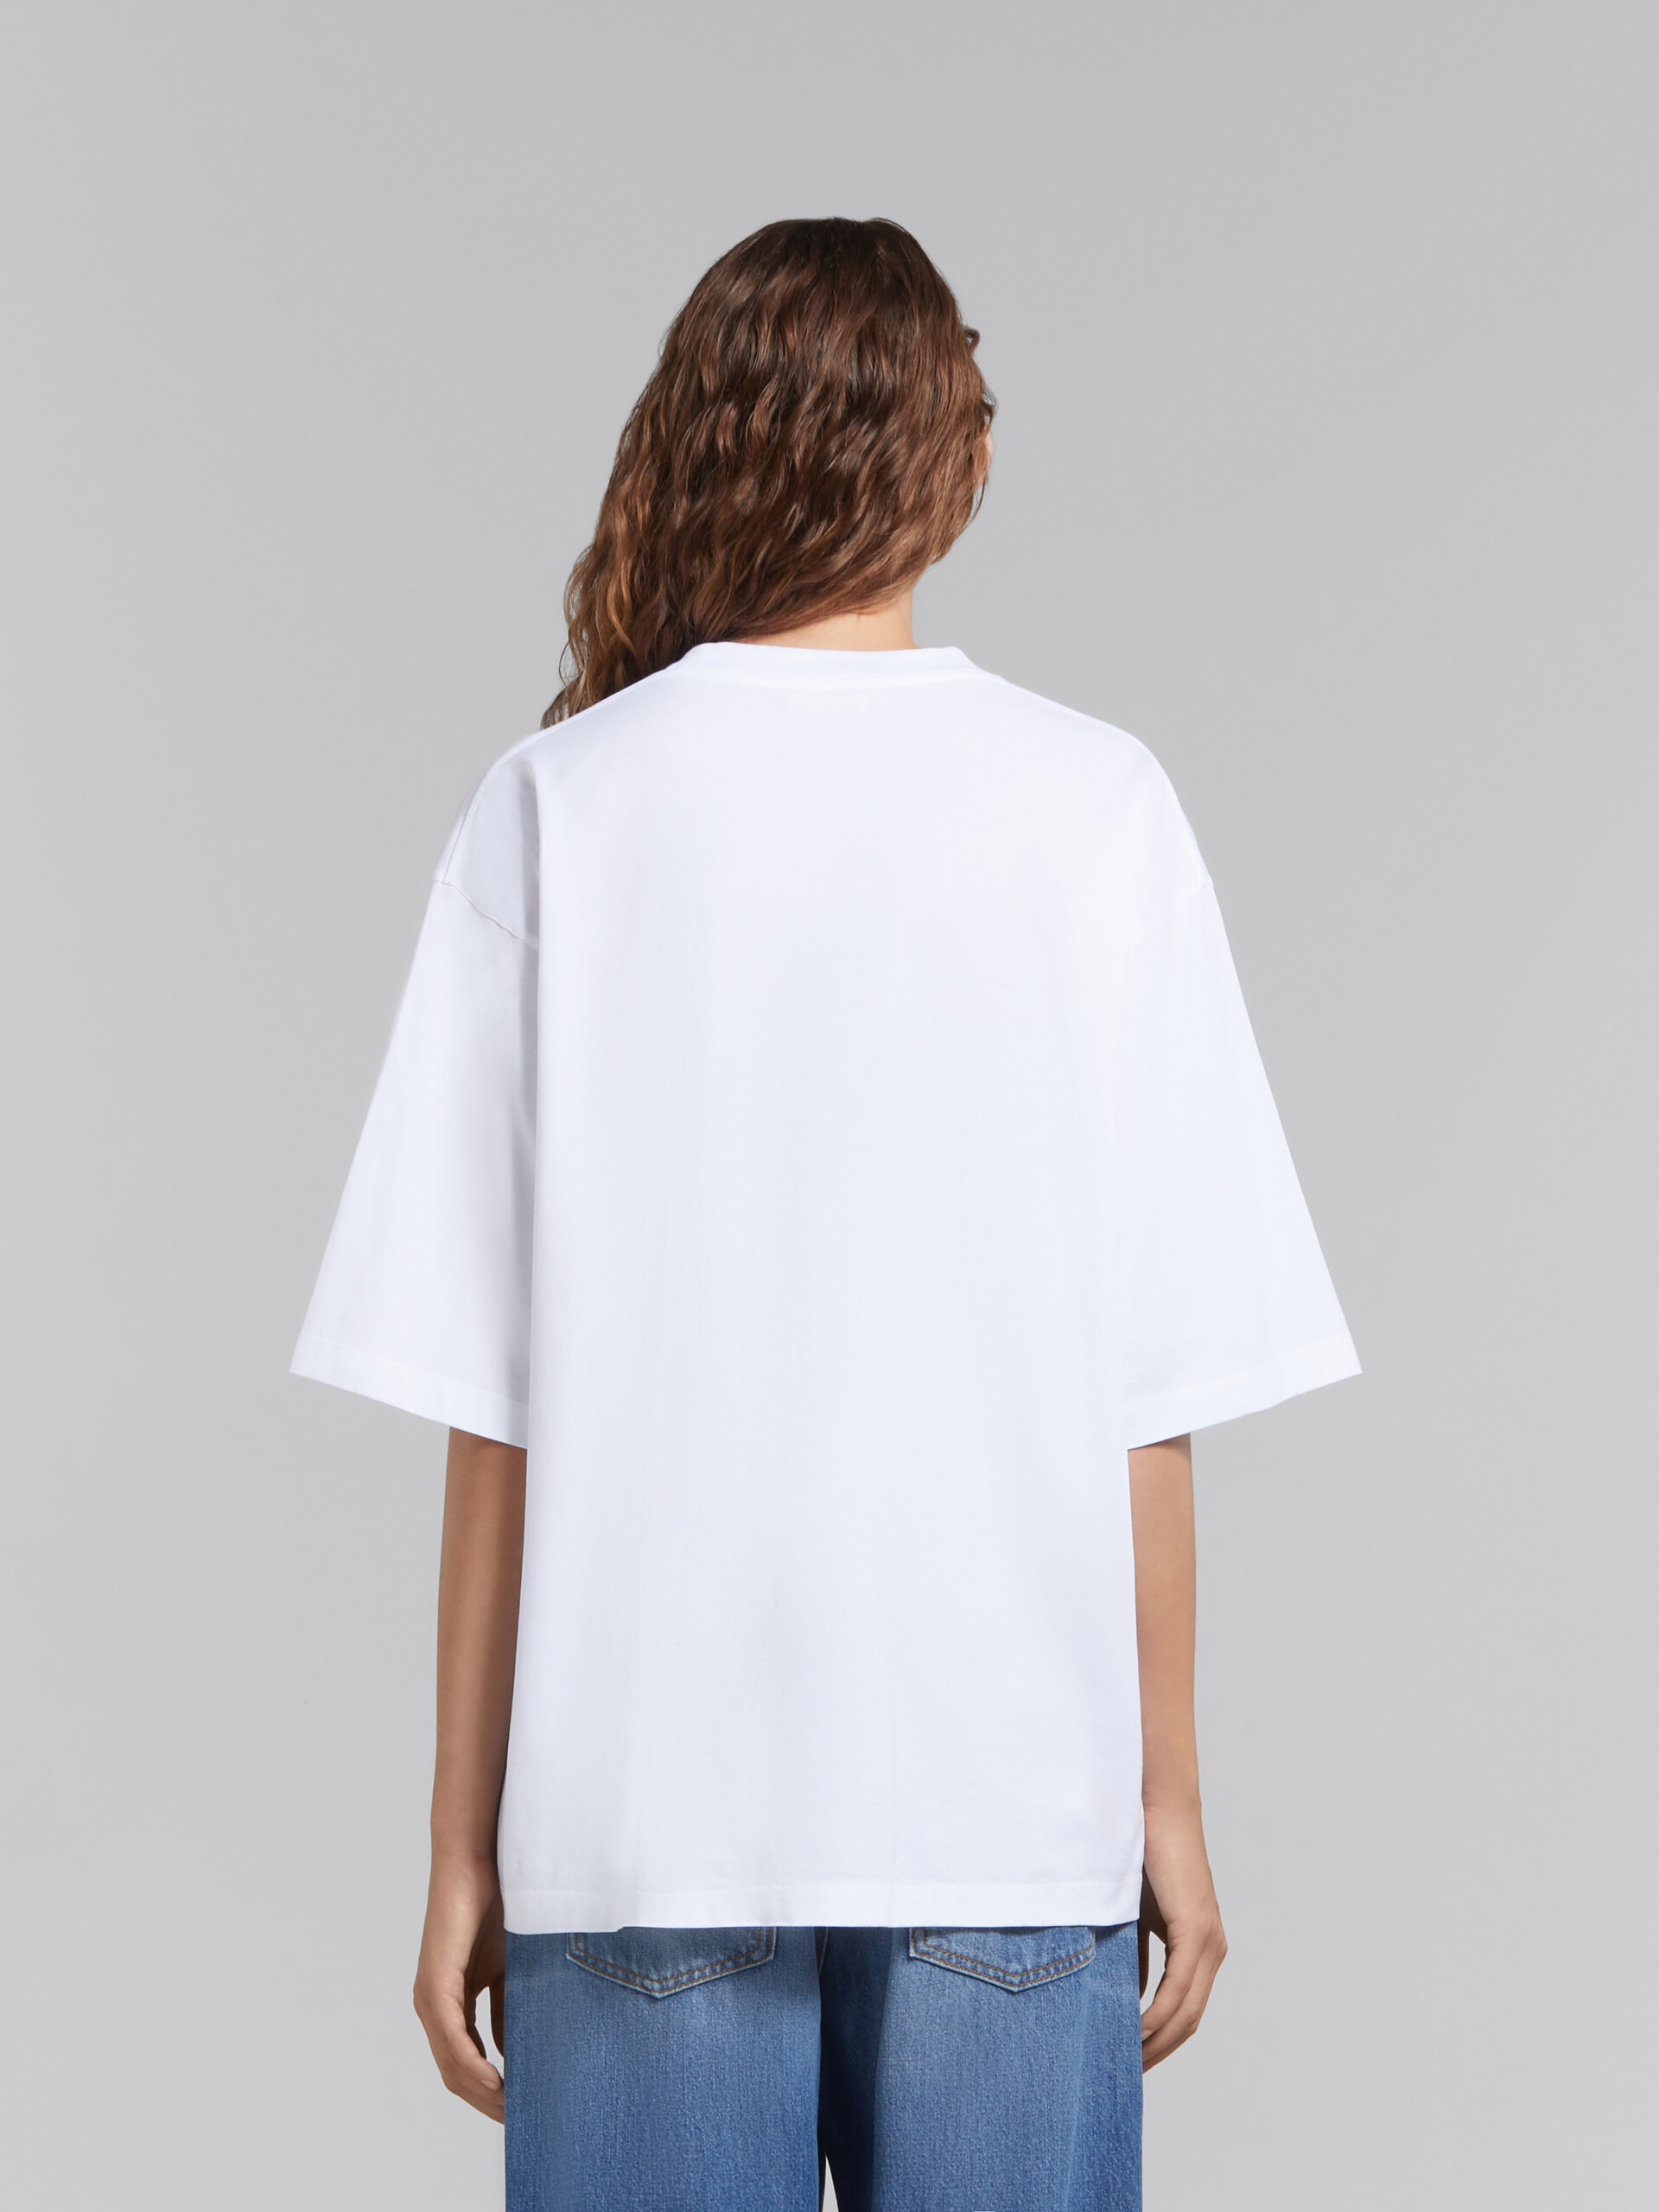 T-shirt in cotone biologico bianco con logo a onde - T-shirt - Image 3